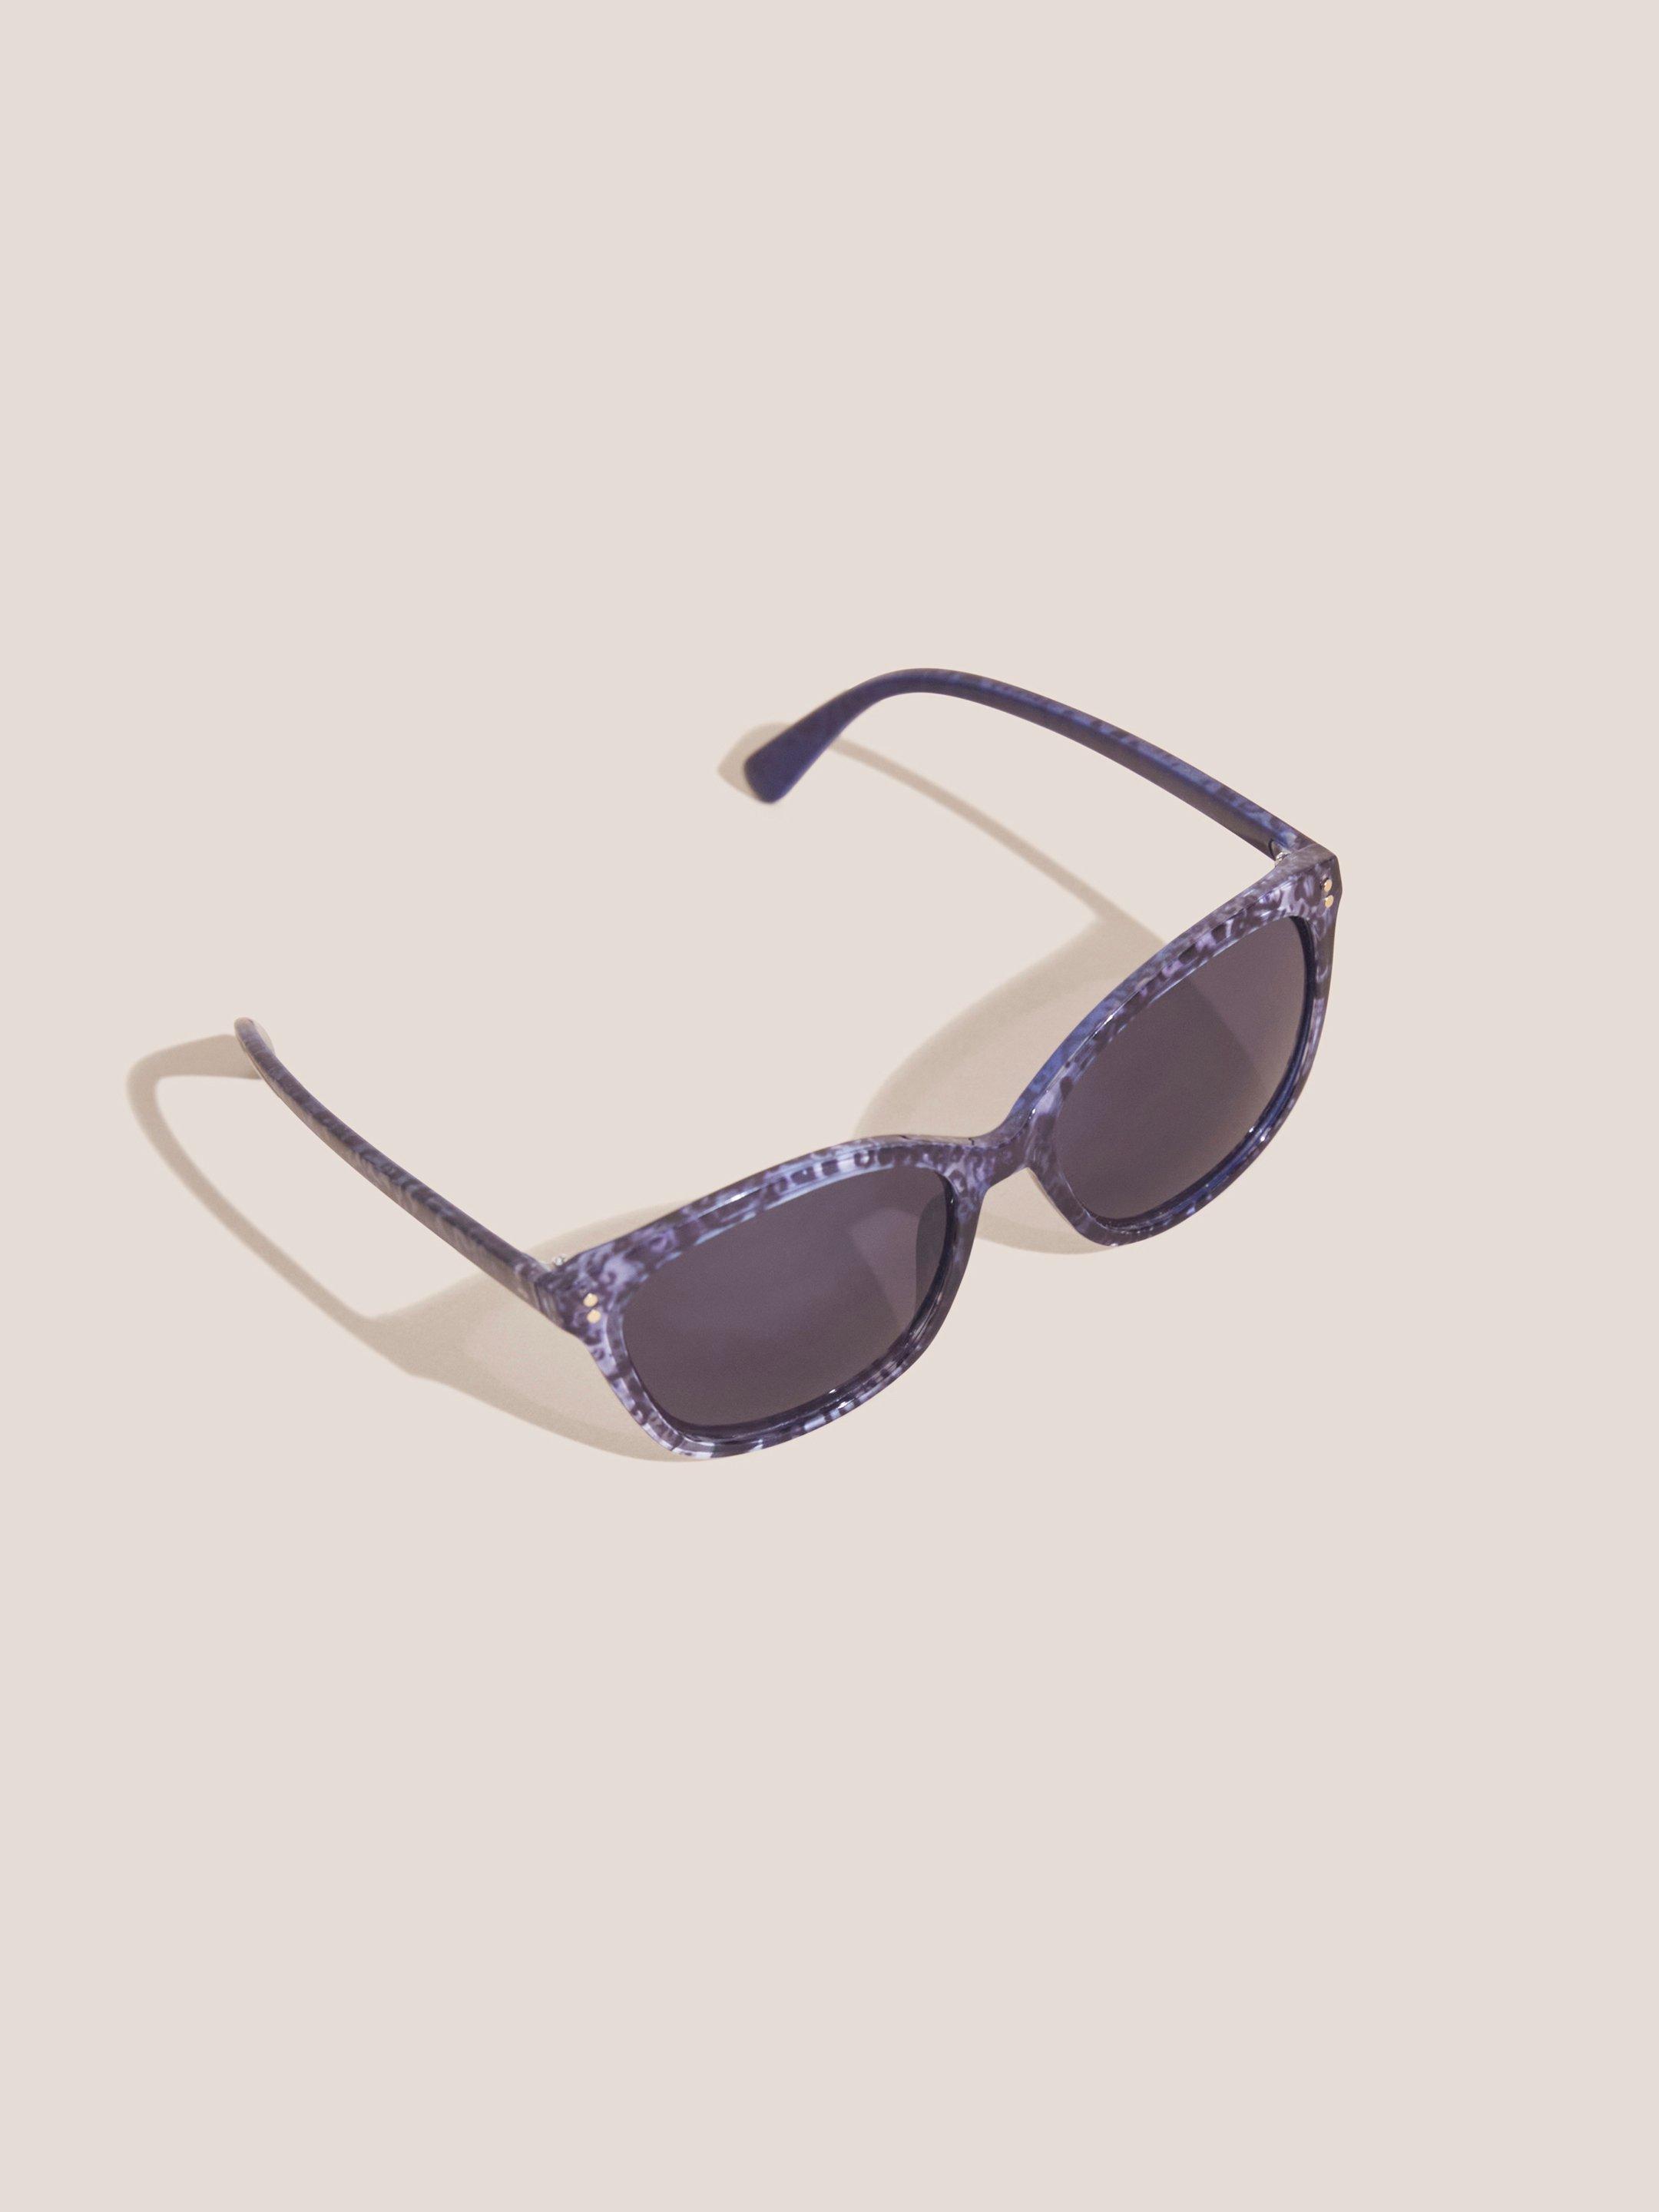 Soft Cateye Sunglasses